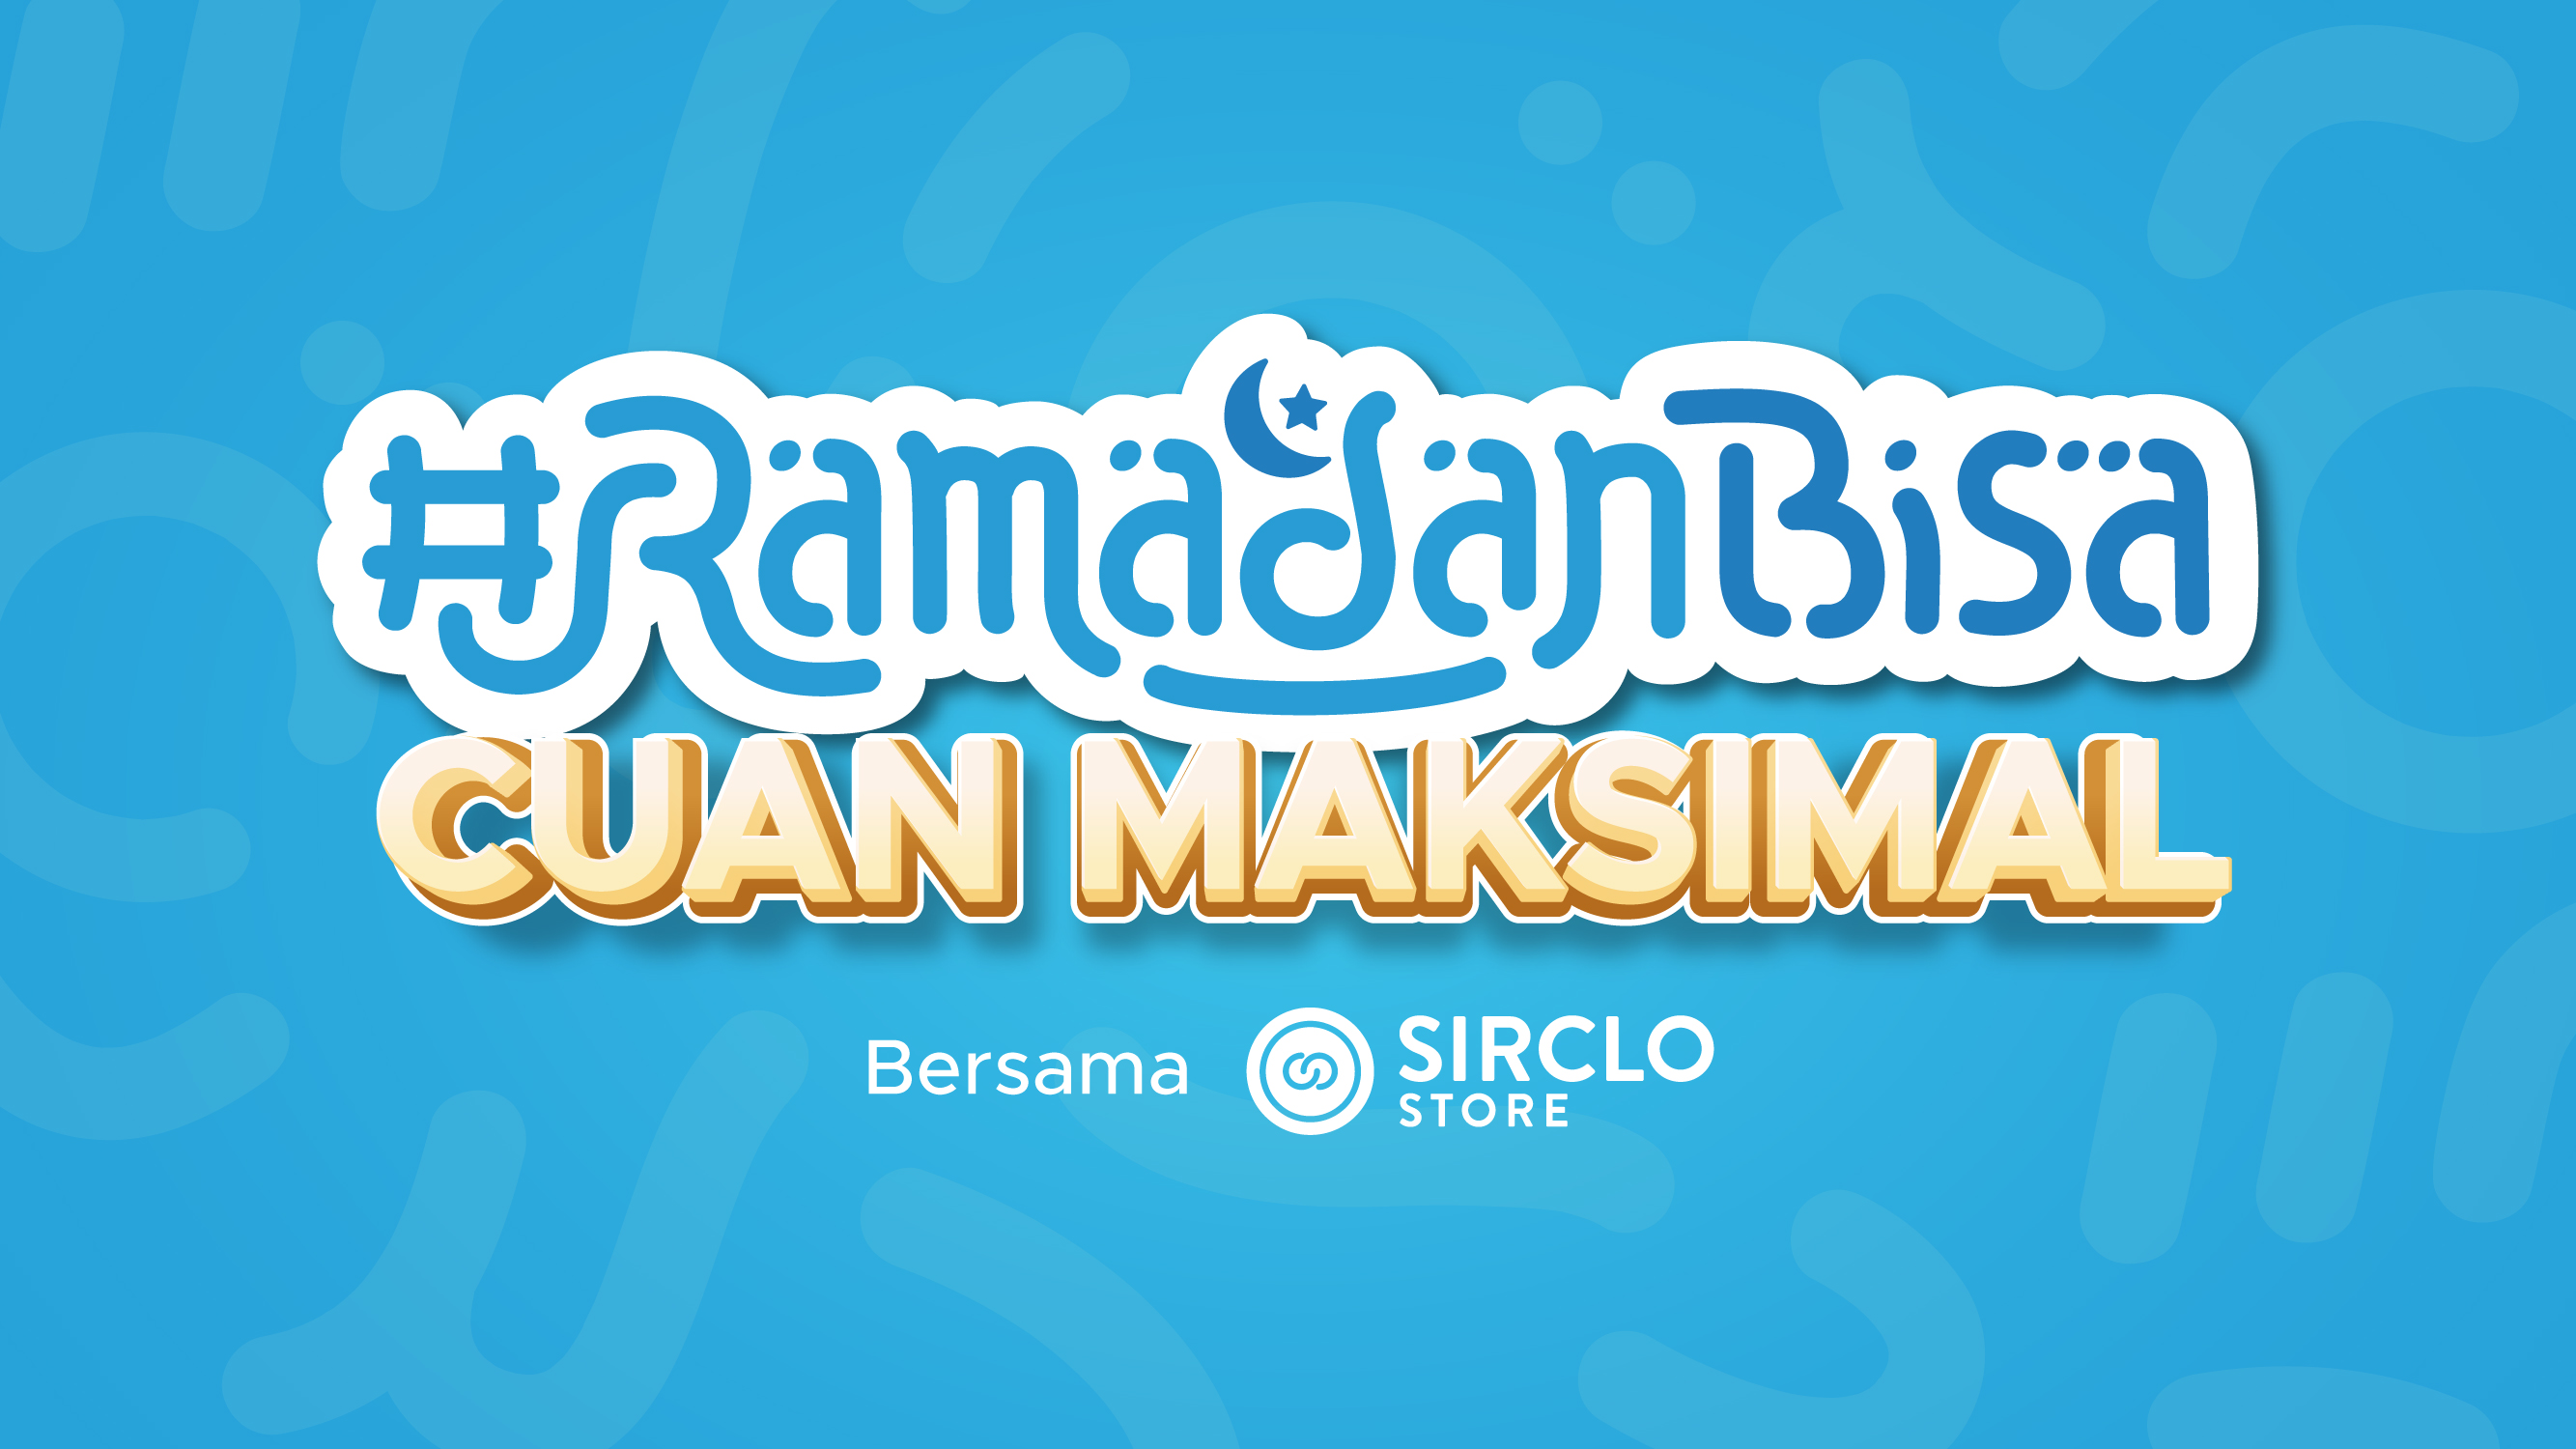 #RamadanBisa Cuan Maksimal Bersama SIRCLO Store